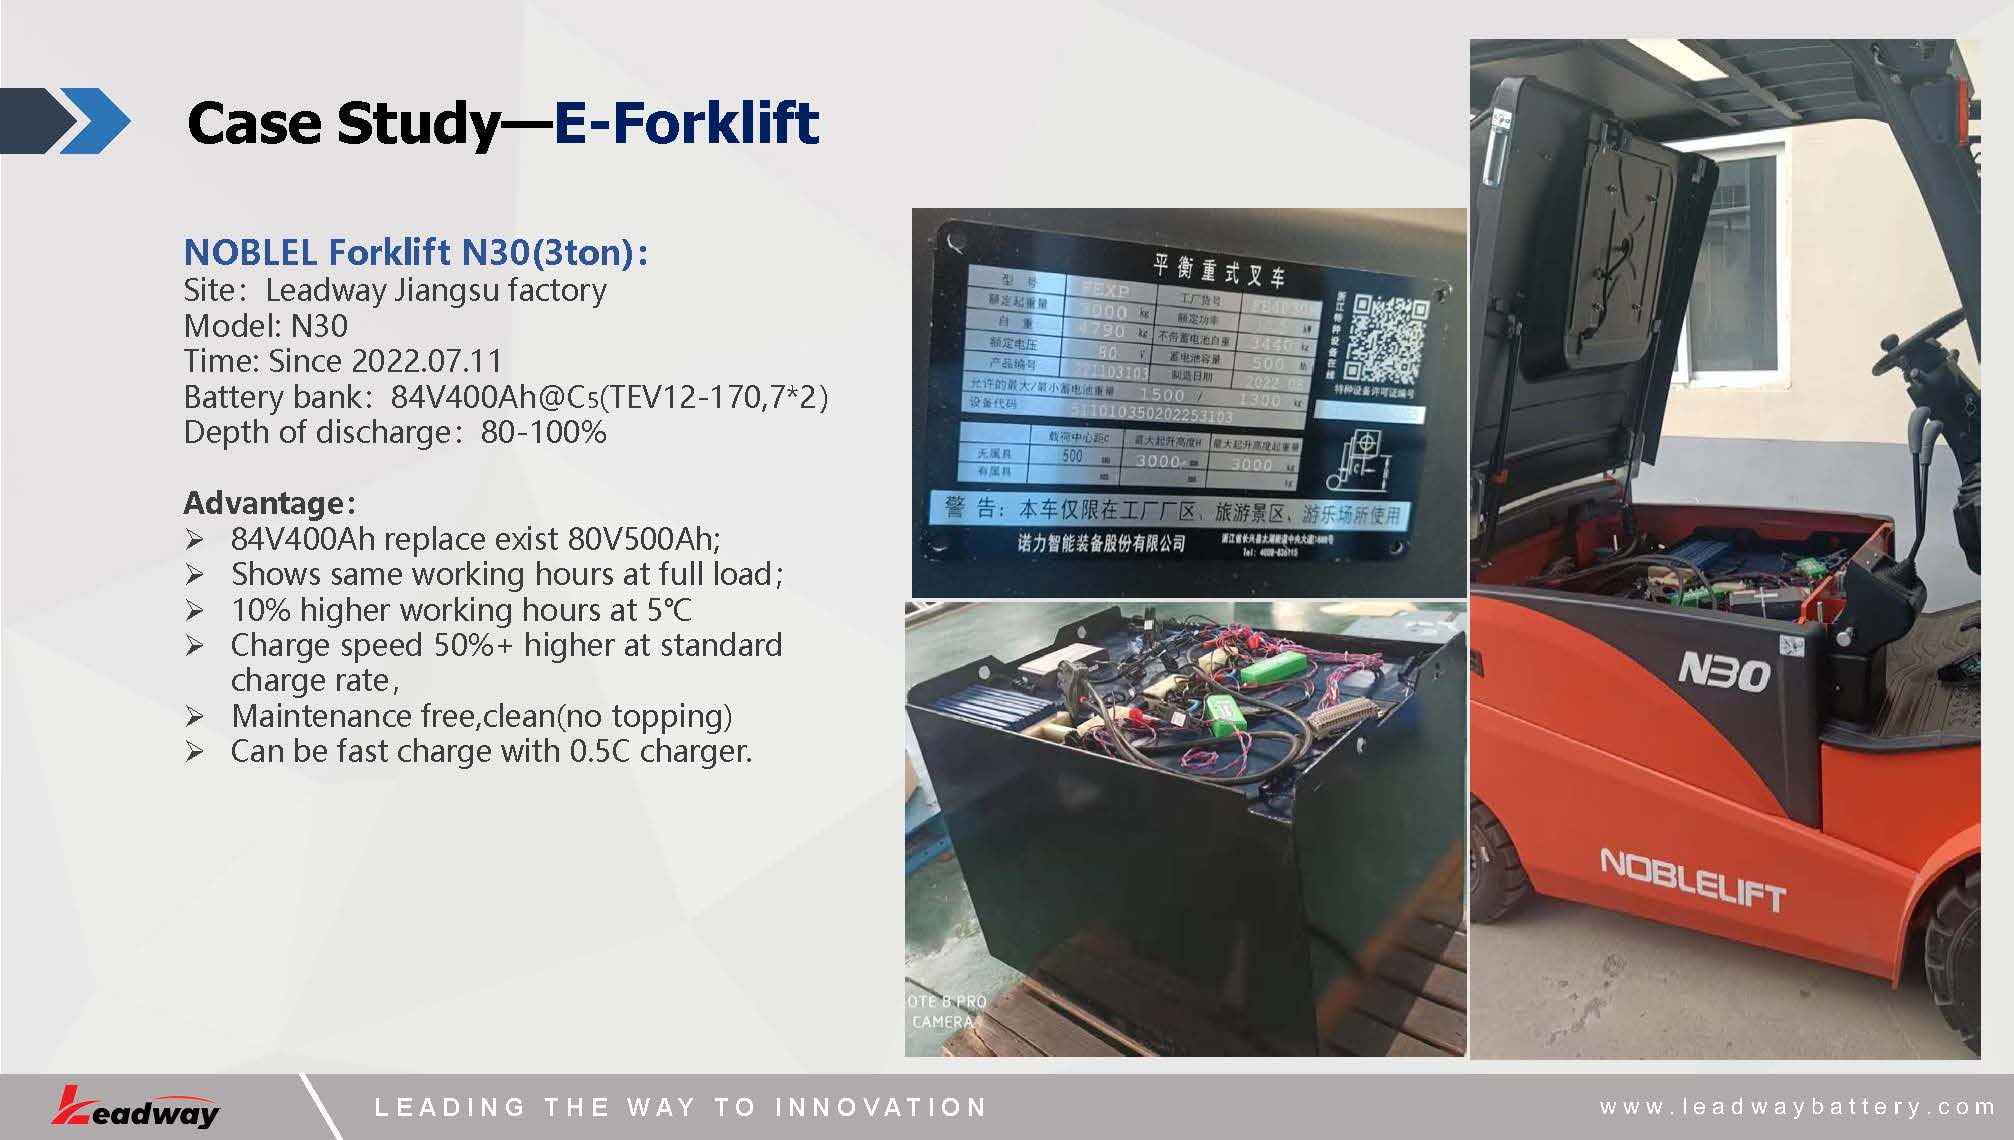 E-Forklift case update